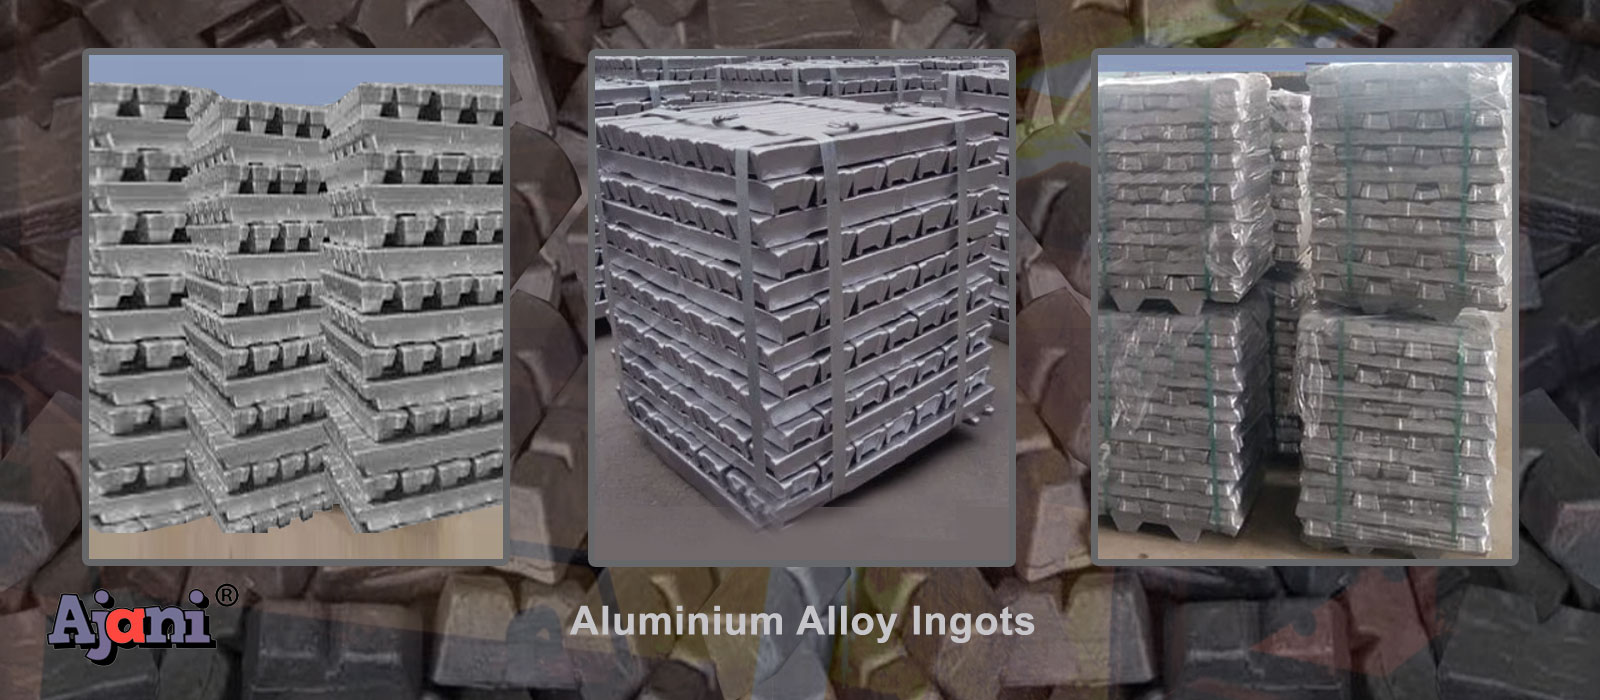 Aluminium Alloy Ingots Manufacturers - Suppliers - Traders Foundry Industries Rajkot Gujarat India